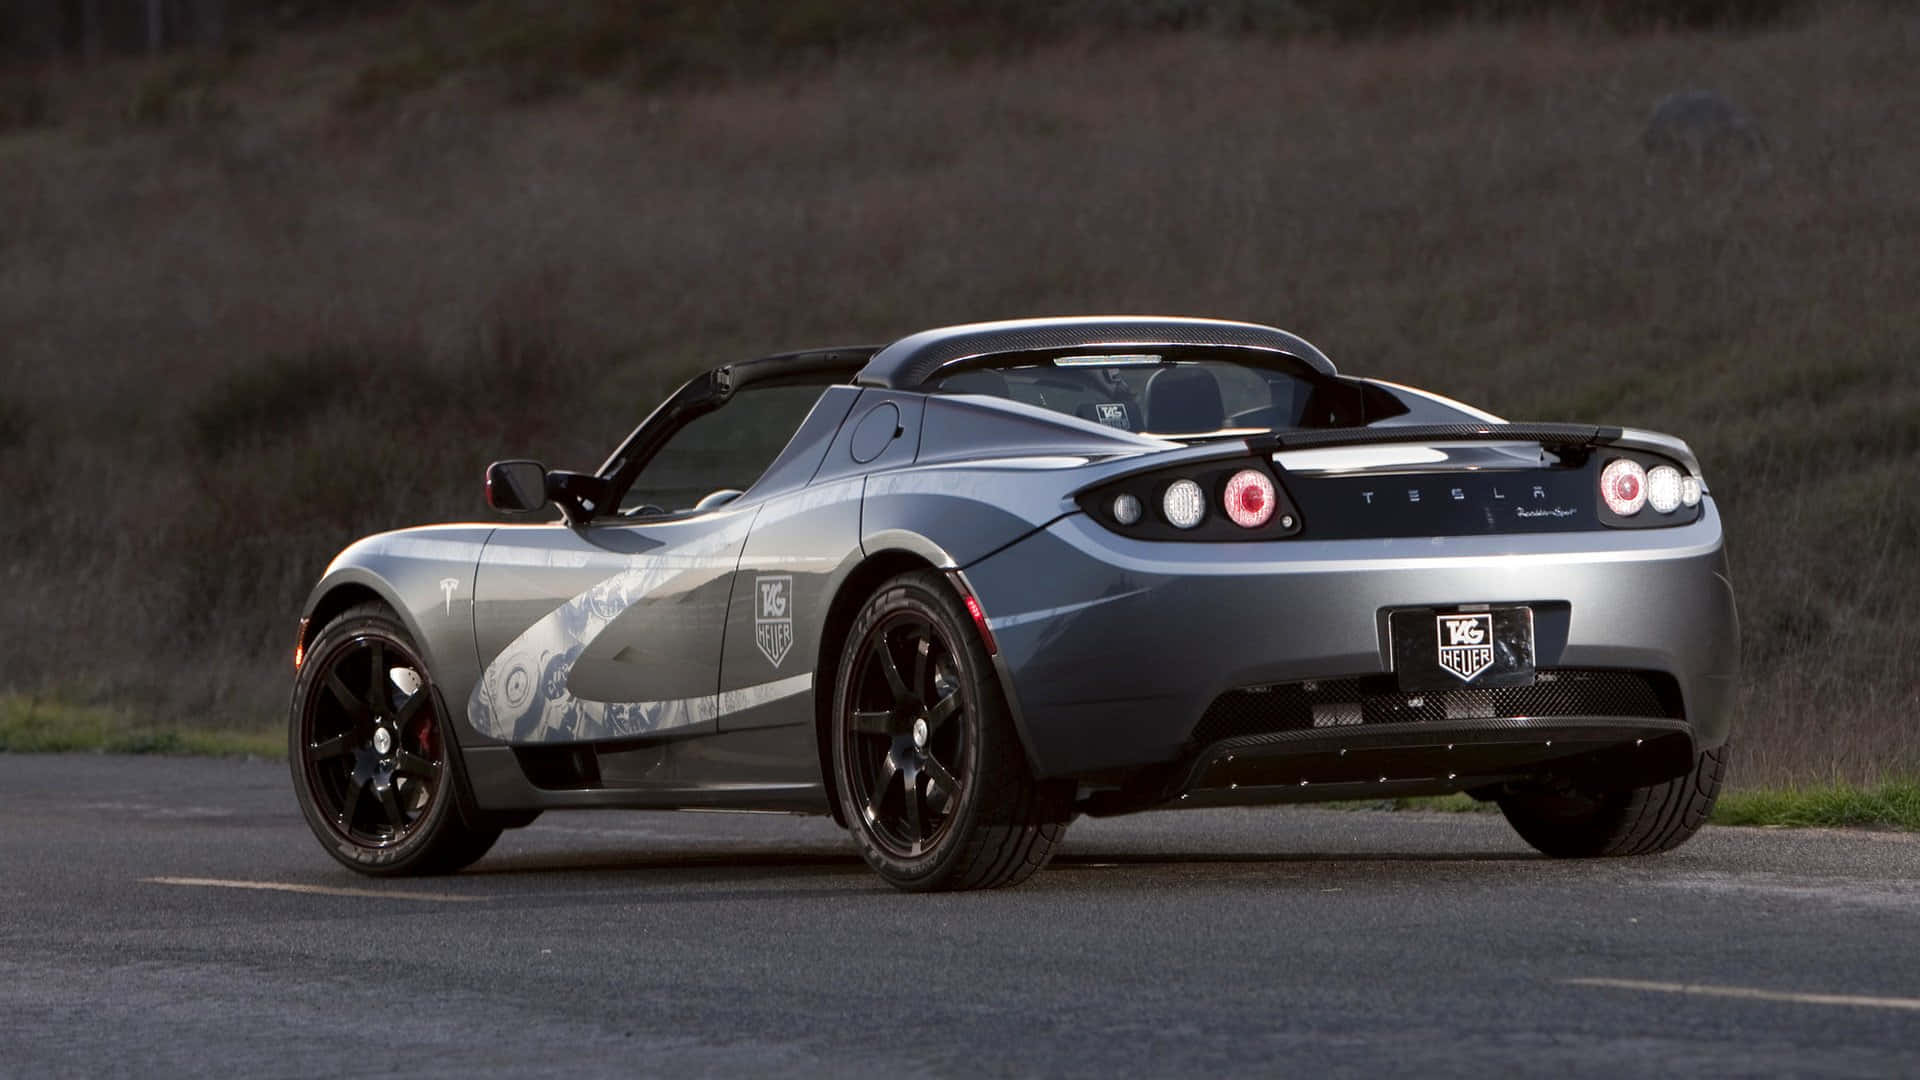 High-speed Luxury - The Tesla Roadster Background